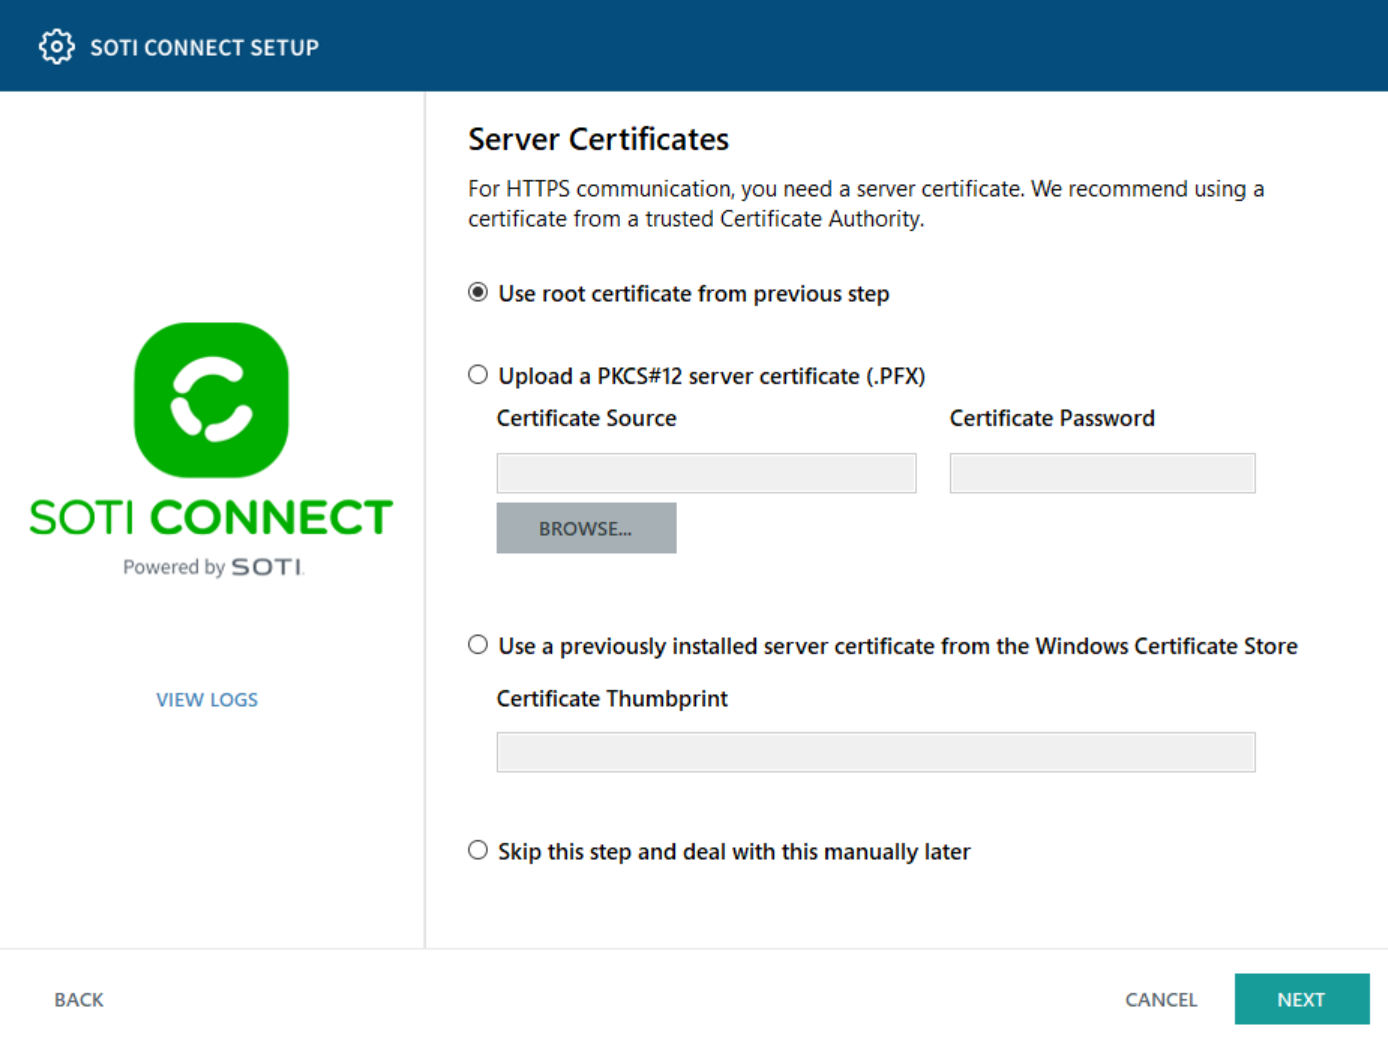 Select a server certificate